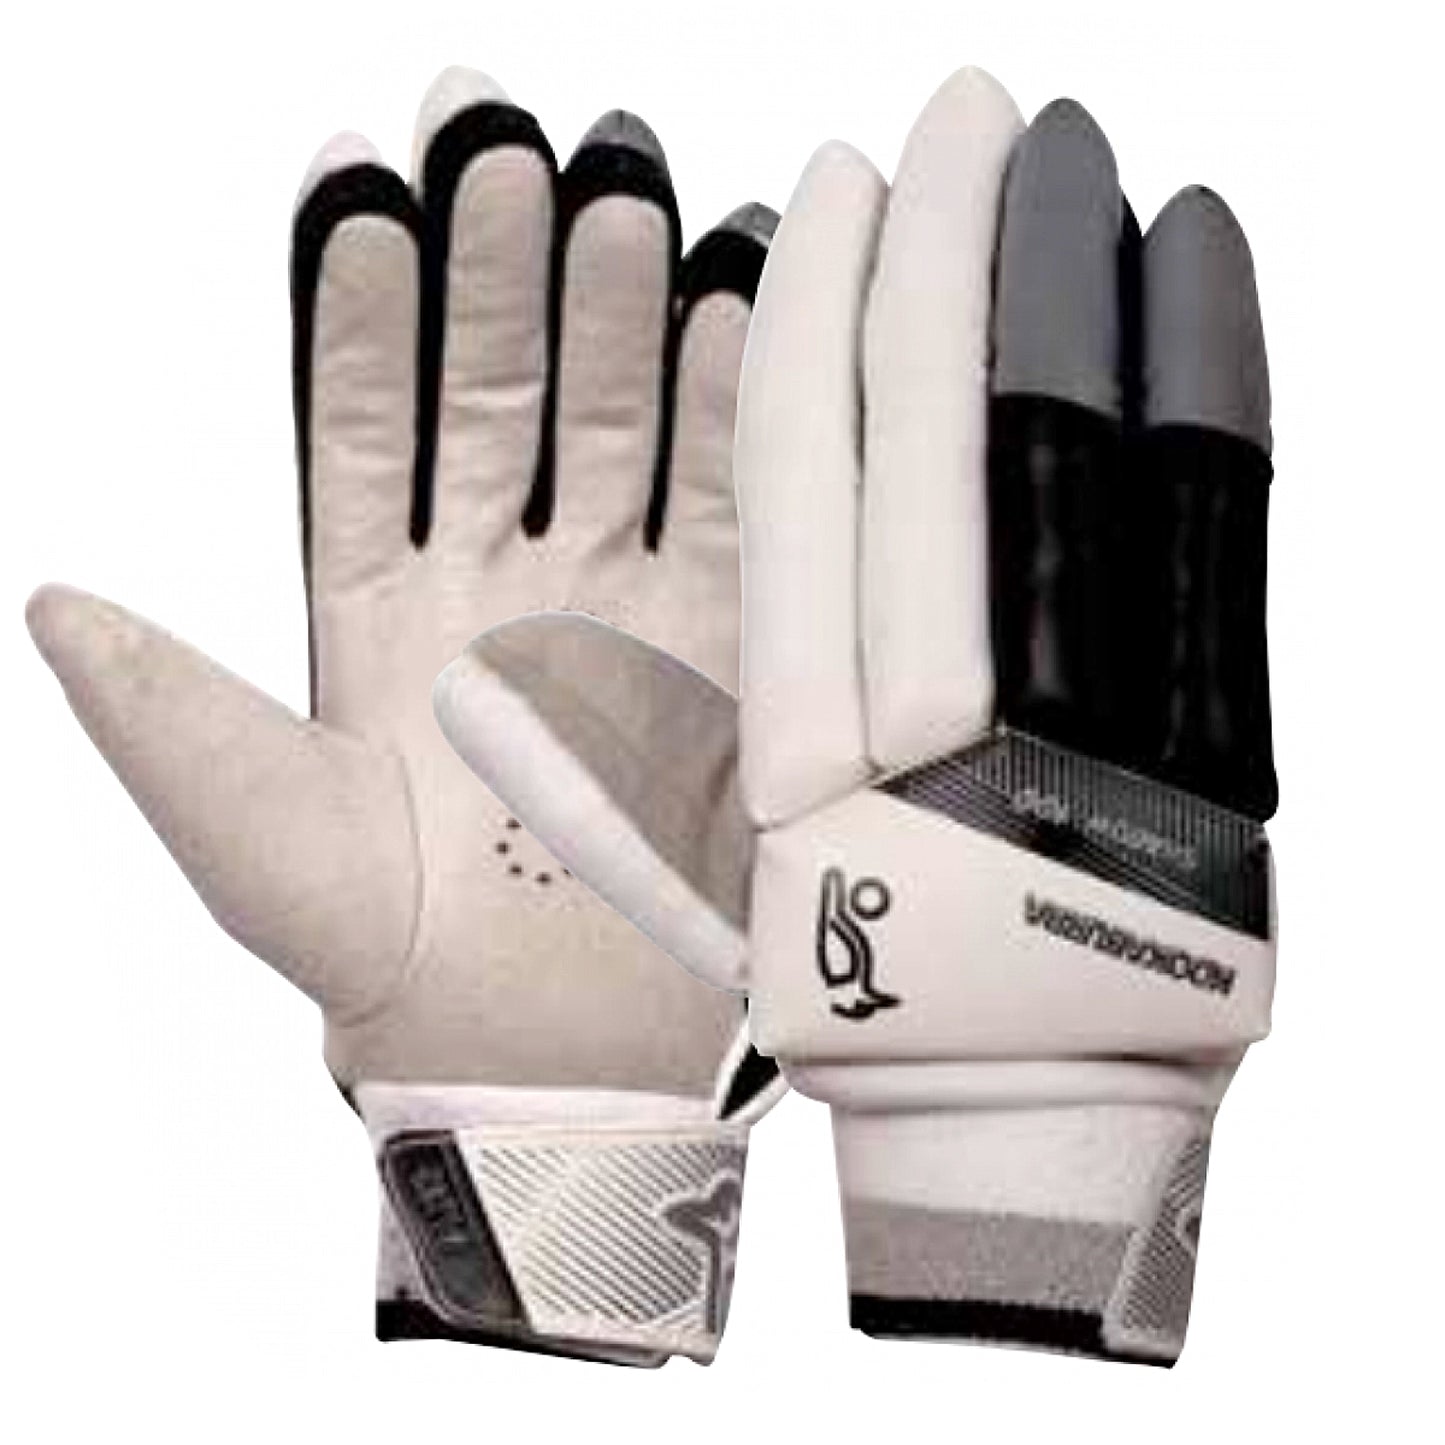 Kookaburra Shadow 100 RH Batting Gloves - Best Price online Prokicksports.com